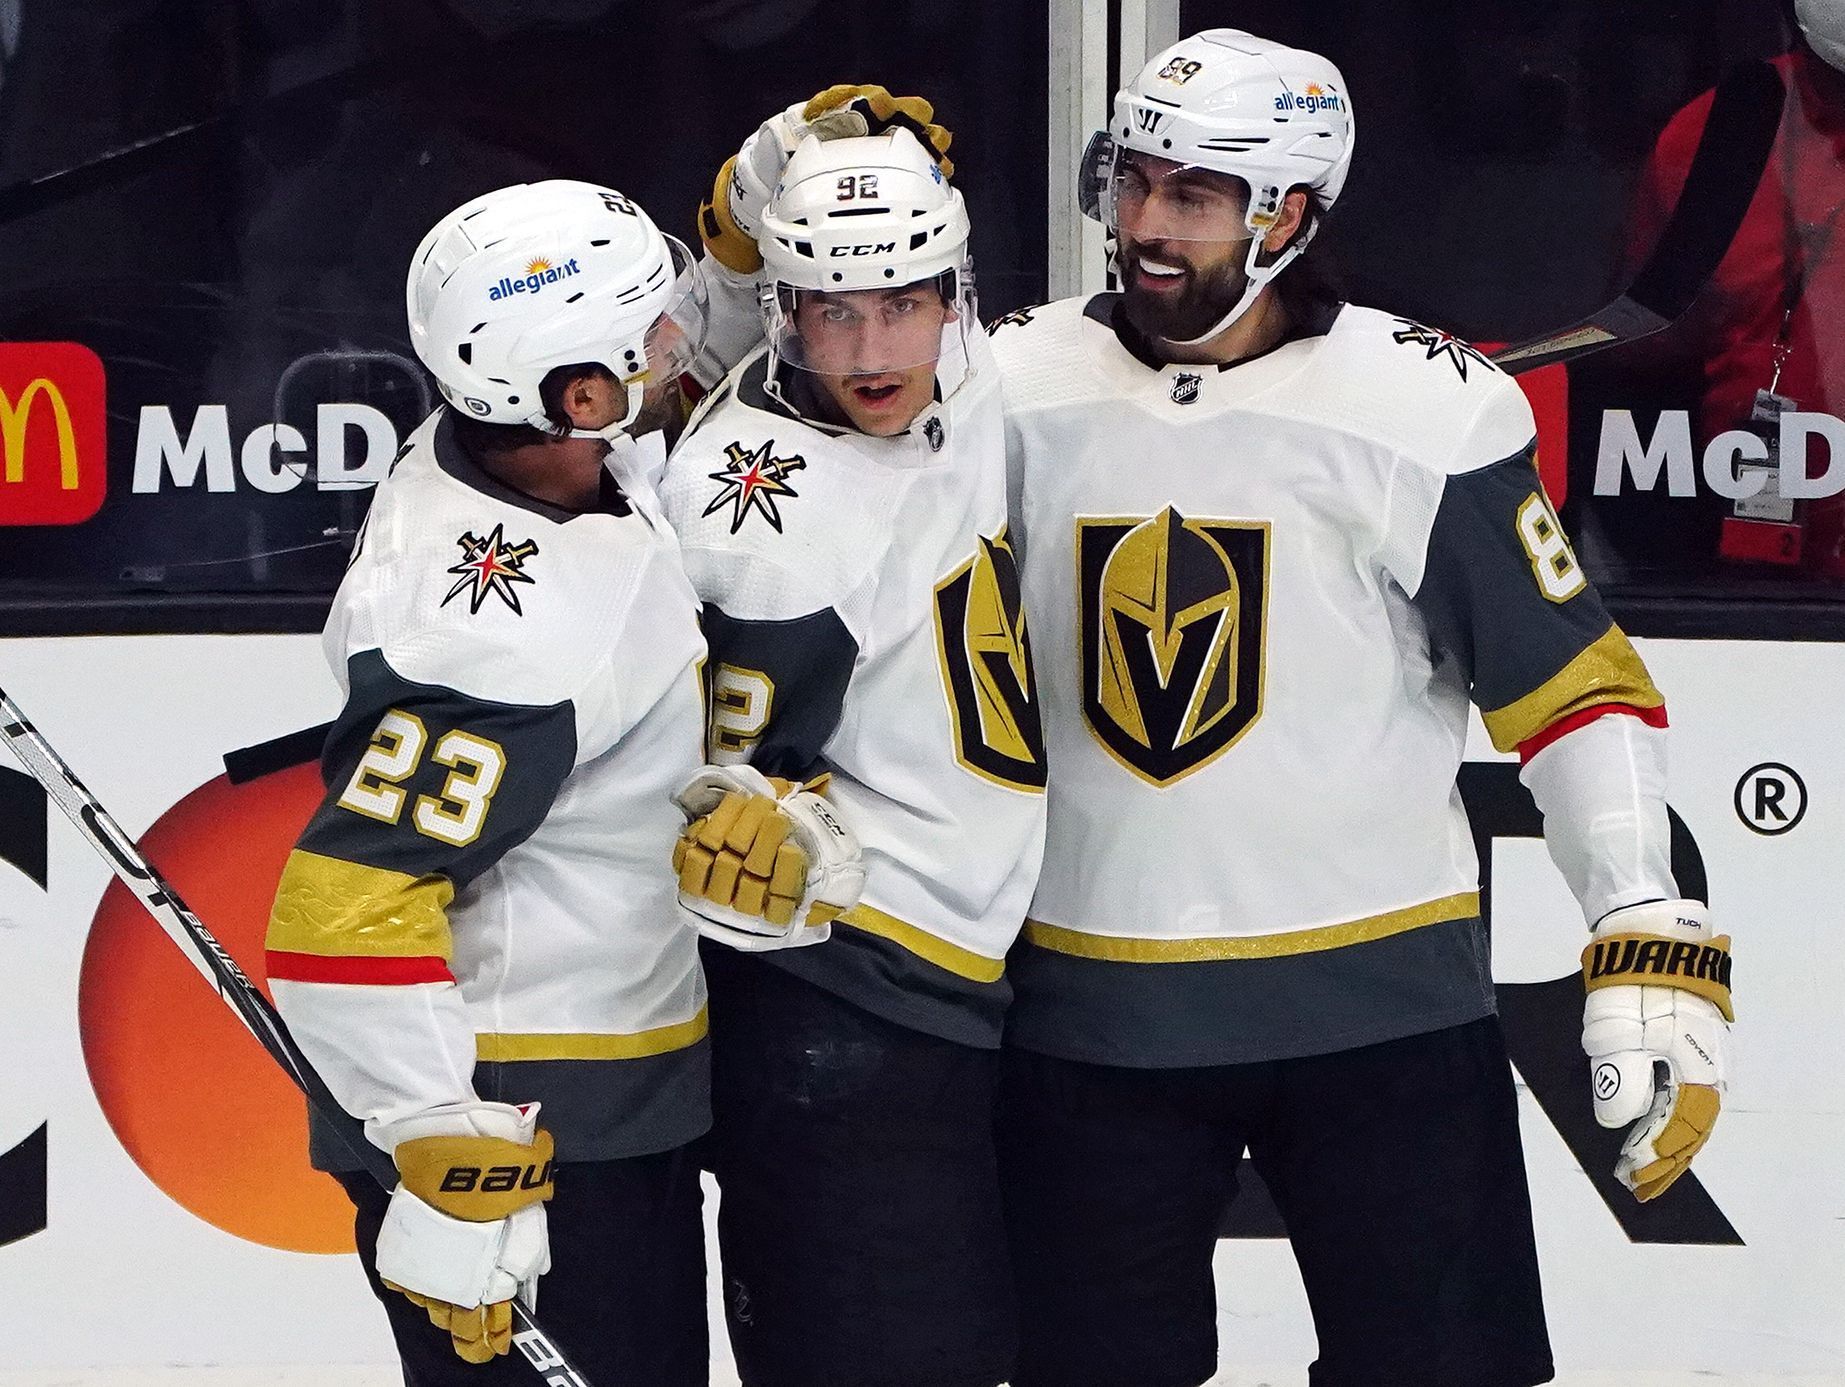 NHL: Vegas Golden Knights at Los Angeles Kings